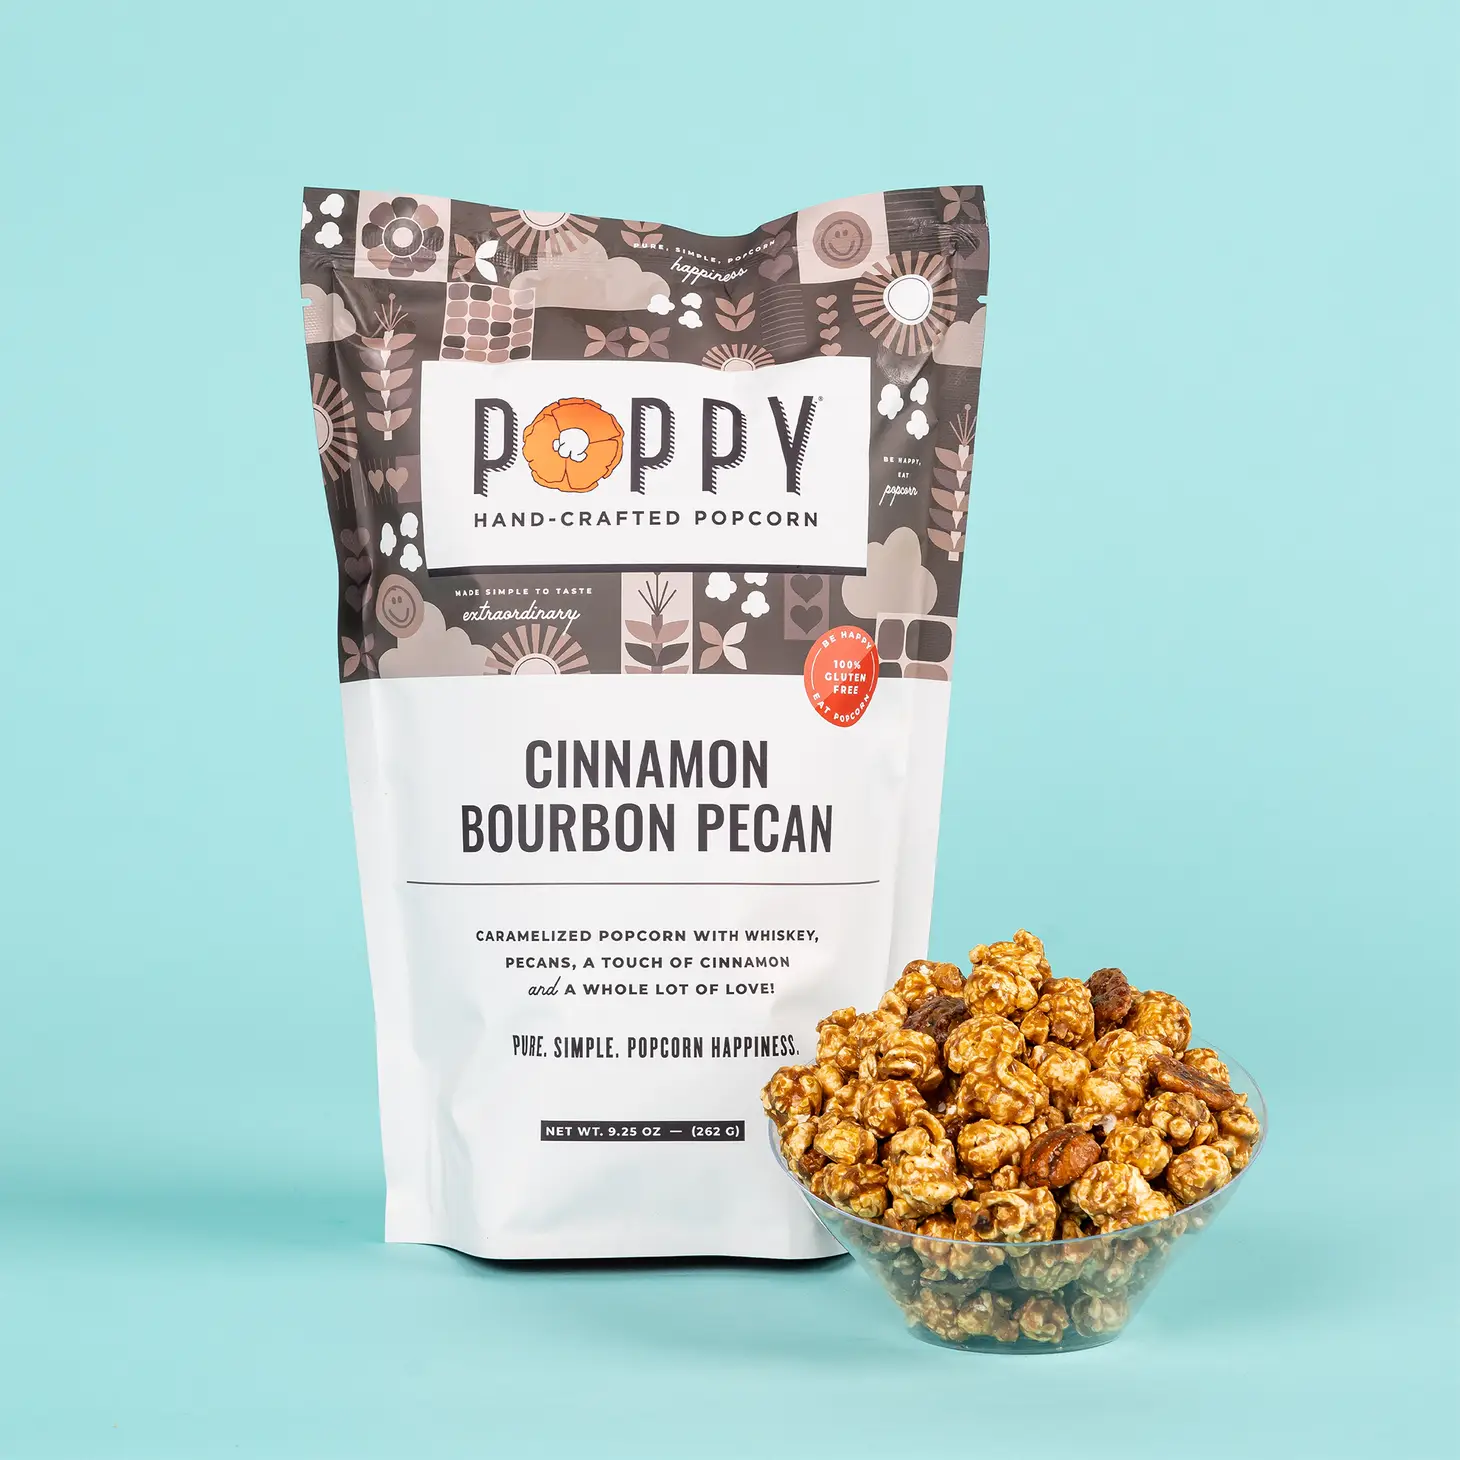 Poppy Handcrafted Popcorn - Market Bag - Cinnamon Bourbon Pecan, Lee's Summit, MO, Bel Fiore Co. Flower Bar + Boutique